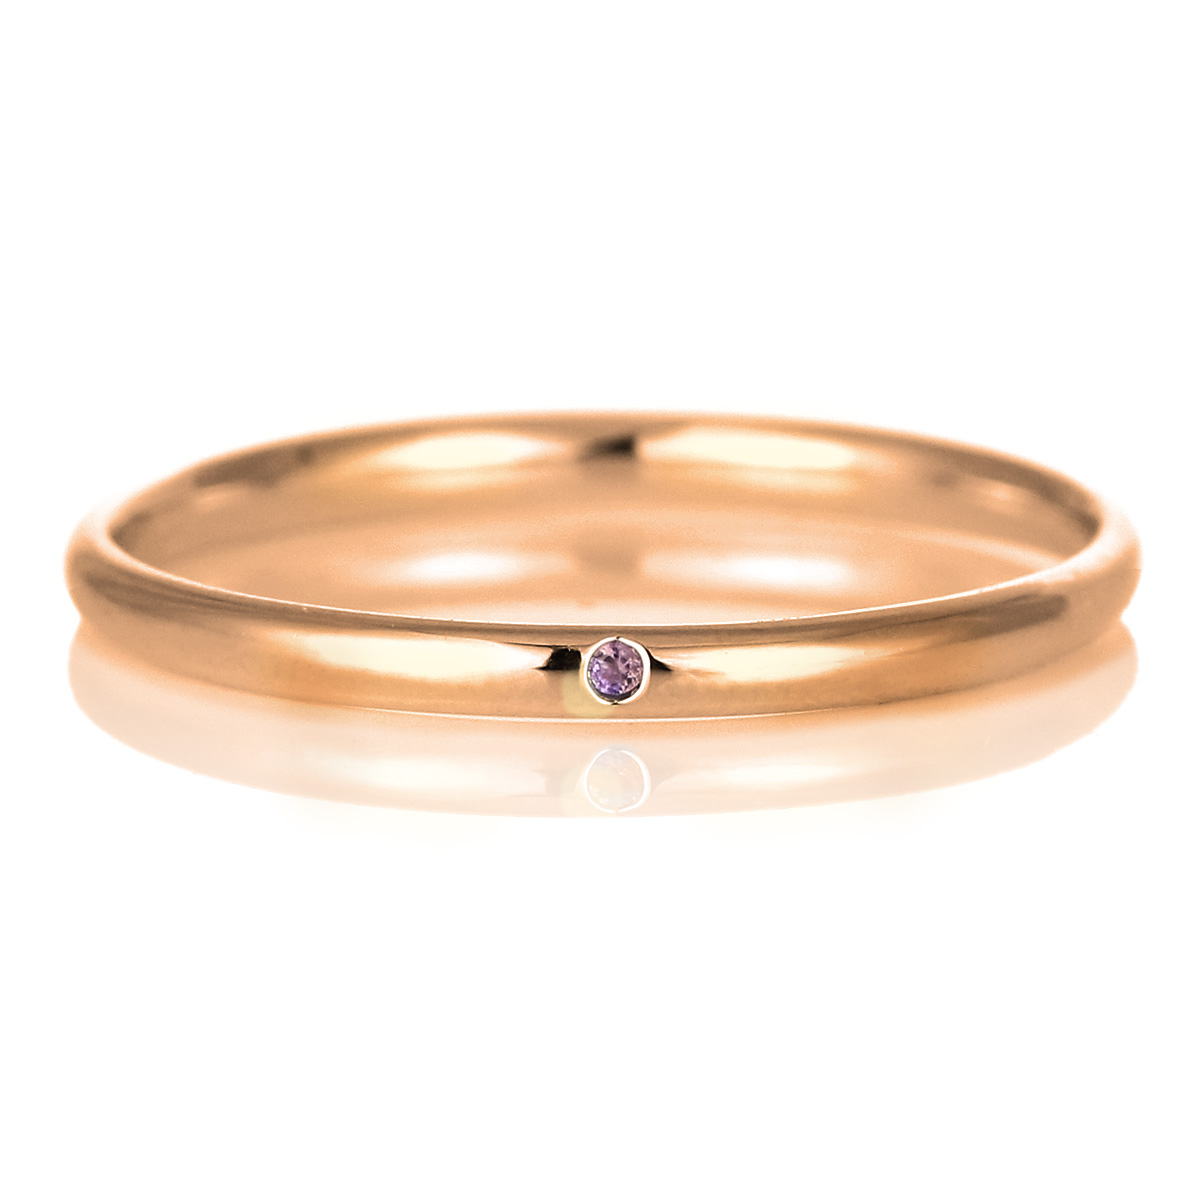 J125-04002002 結婚指輪“選べる結婚指輪“ |東京でオーダーメイドの結婚指輪・婚約指輪のSUEHIRO(スエヒロ) | SUEHIRO